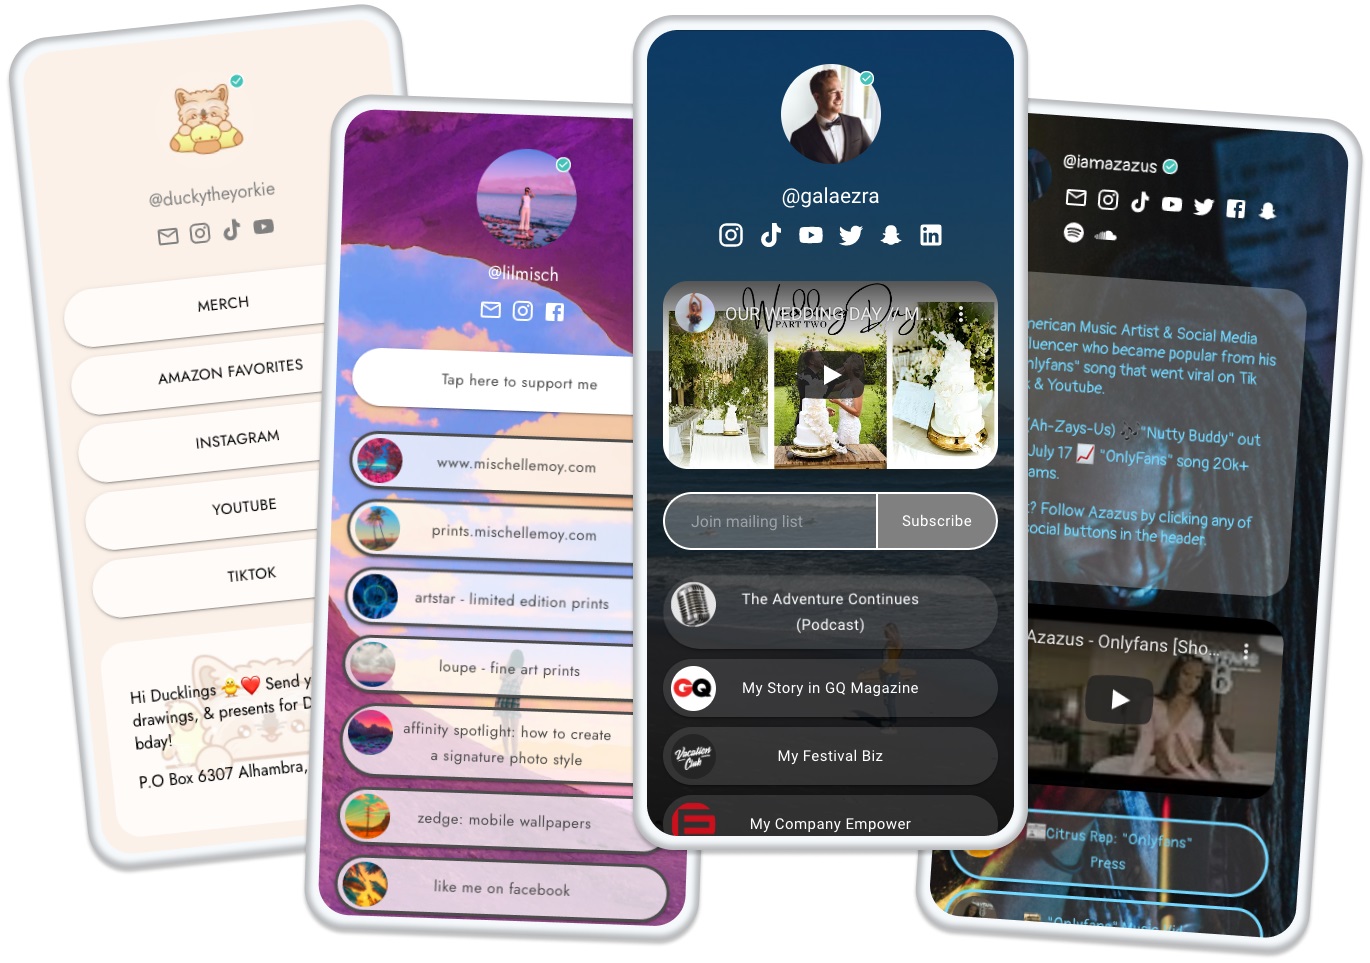 Creator Economy Platform Koji Announces “Giveaway” App